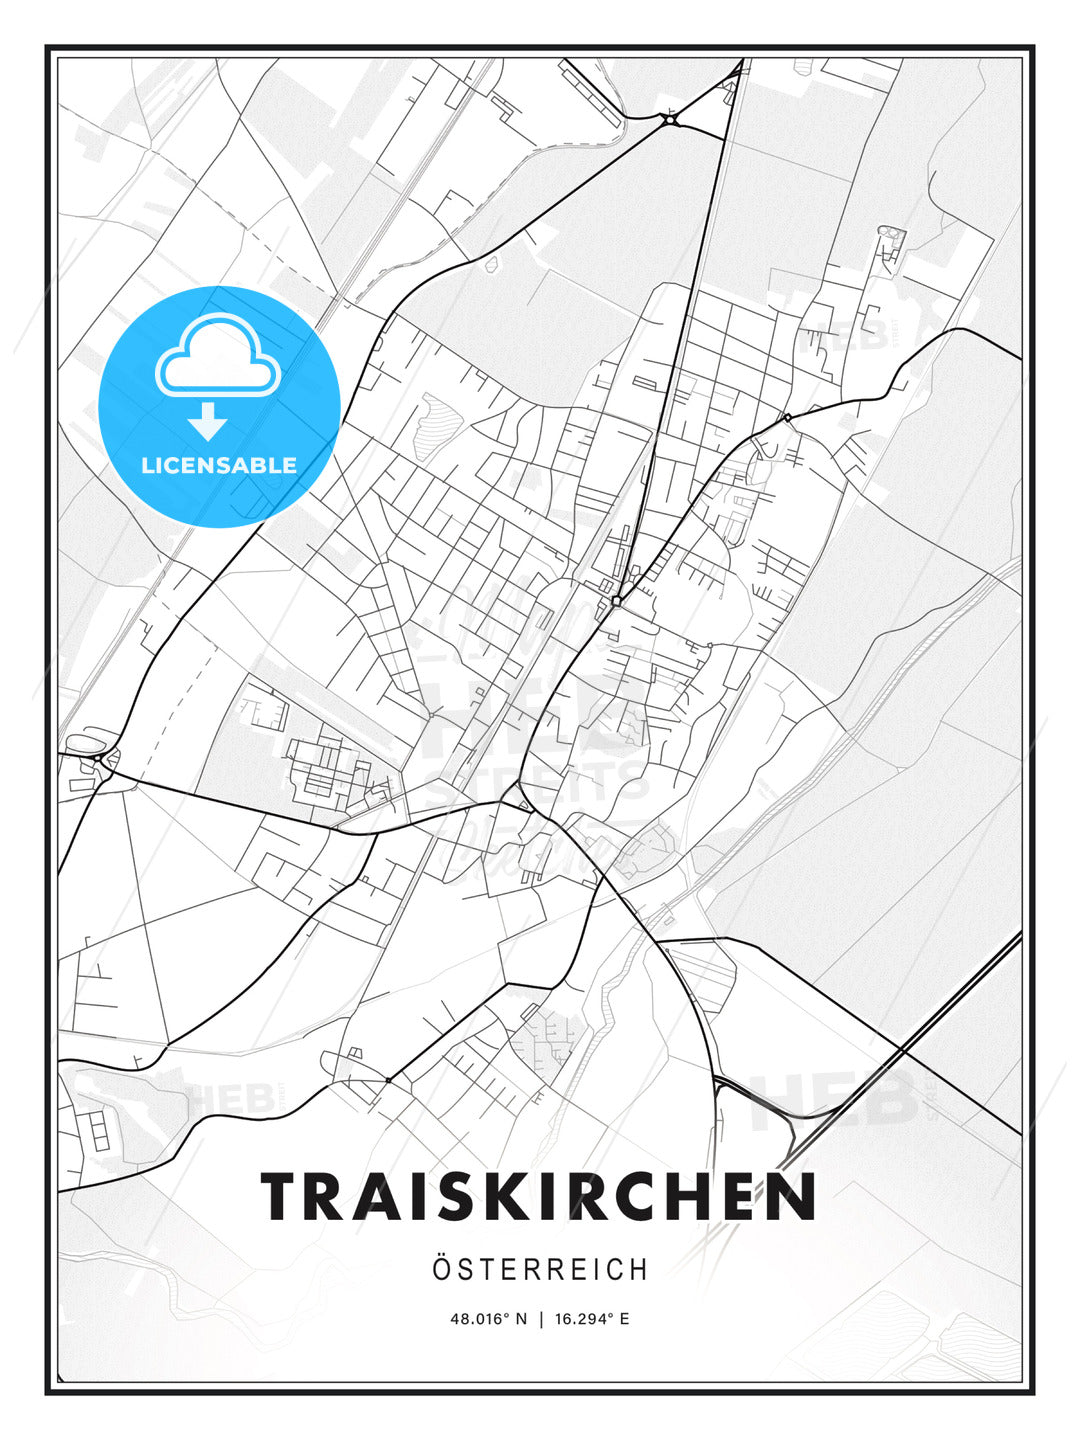 Traiskirchen, Austria, Modern Print Template in Various Formats - HEBSTREITS Sketches